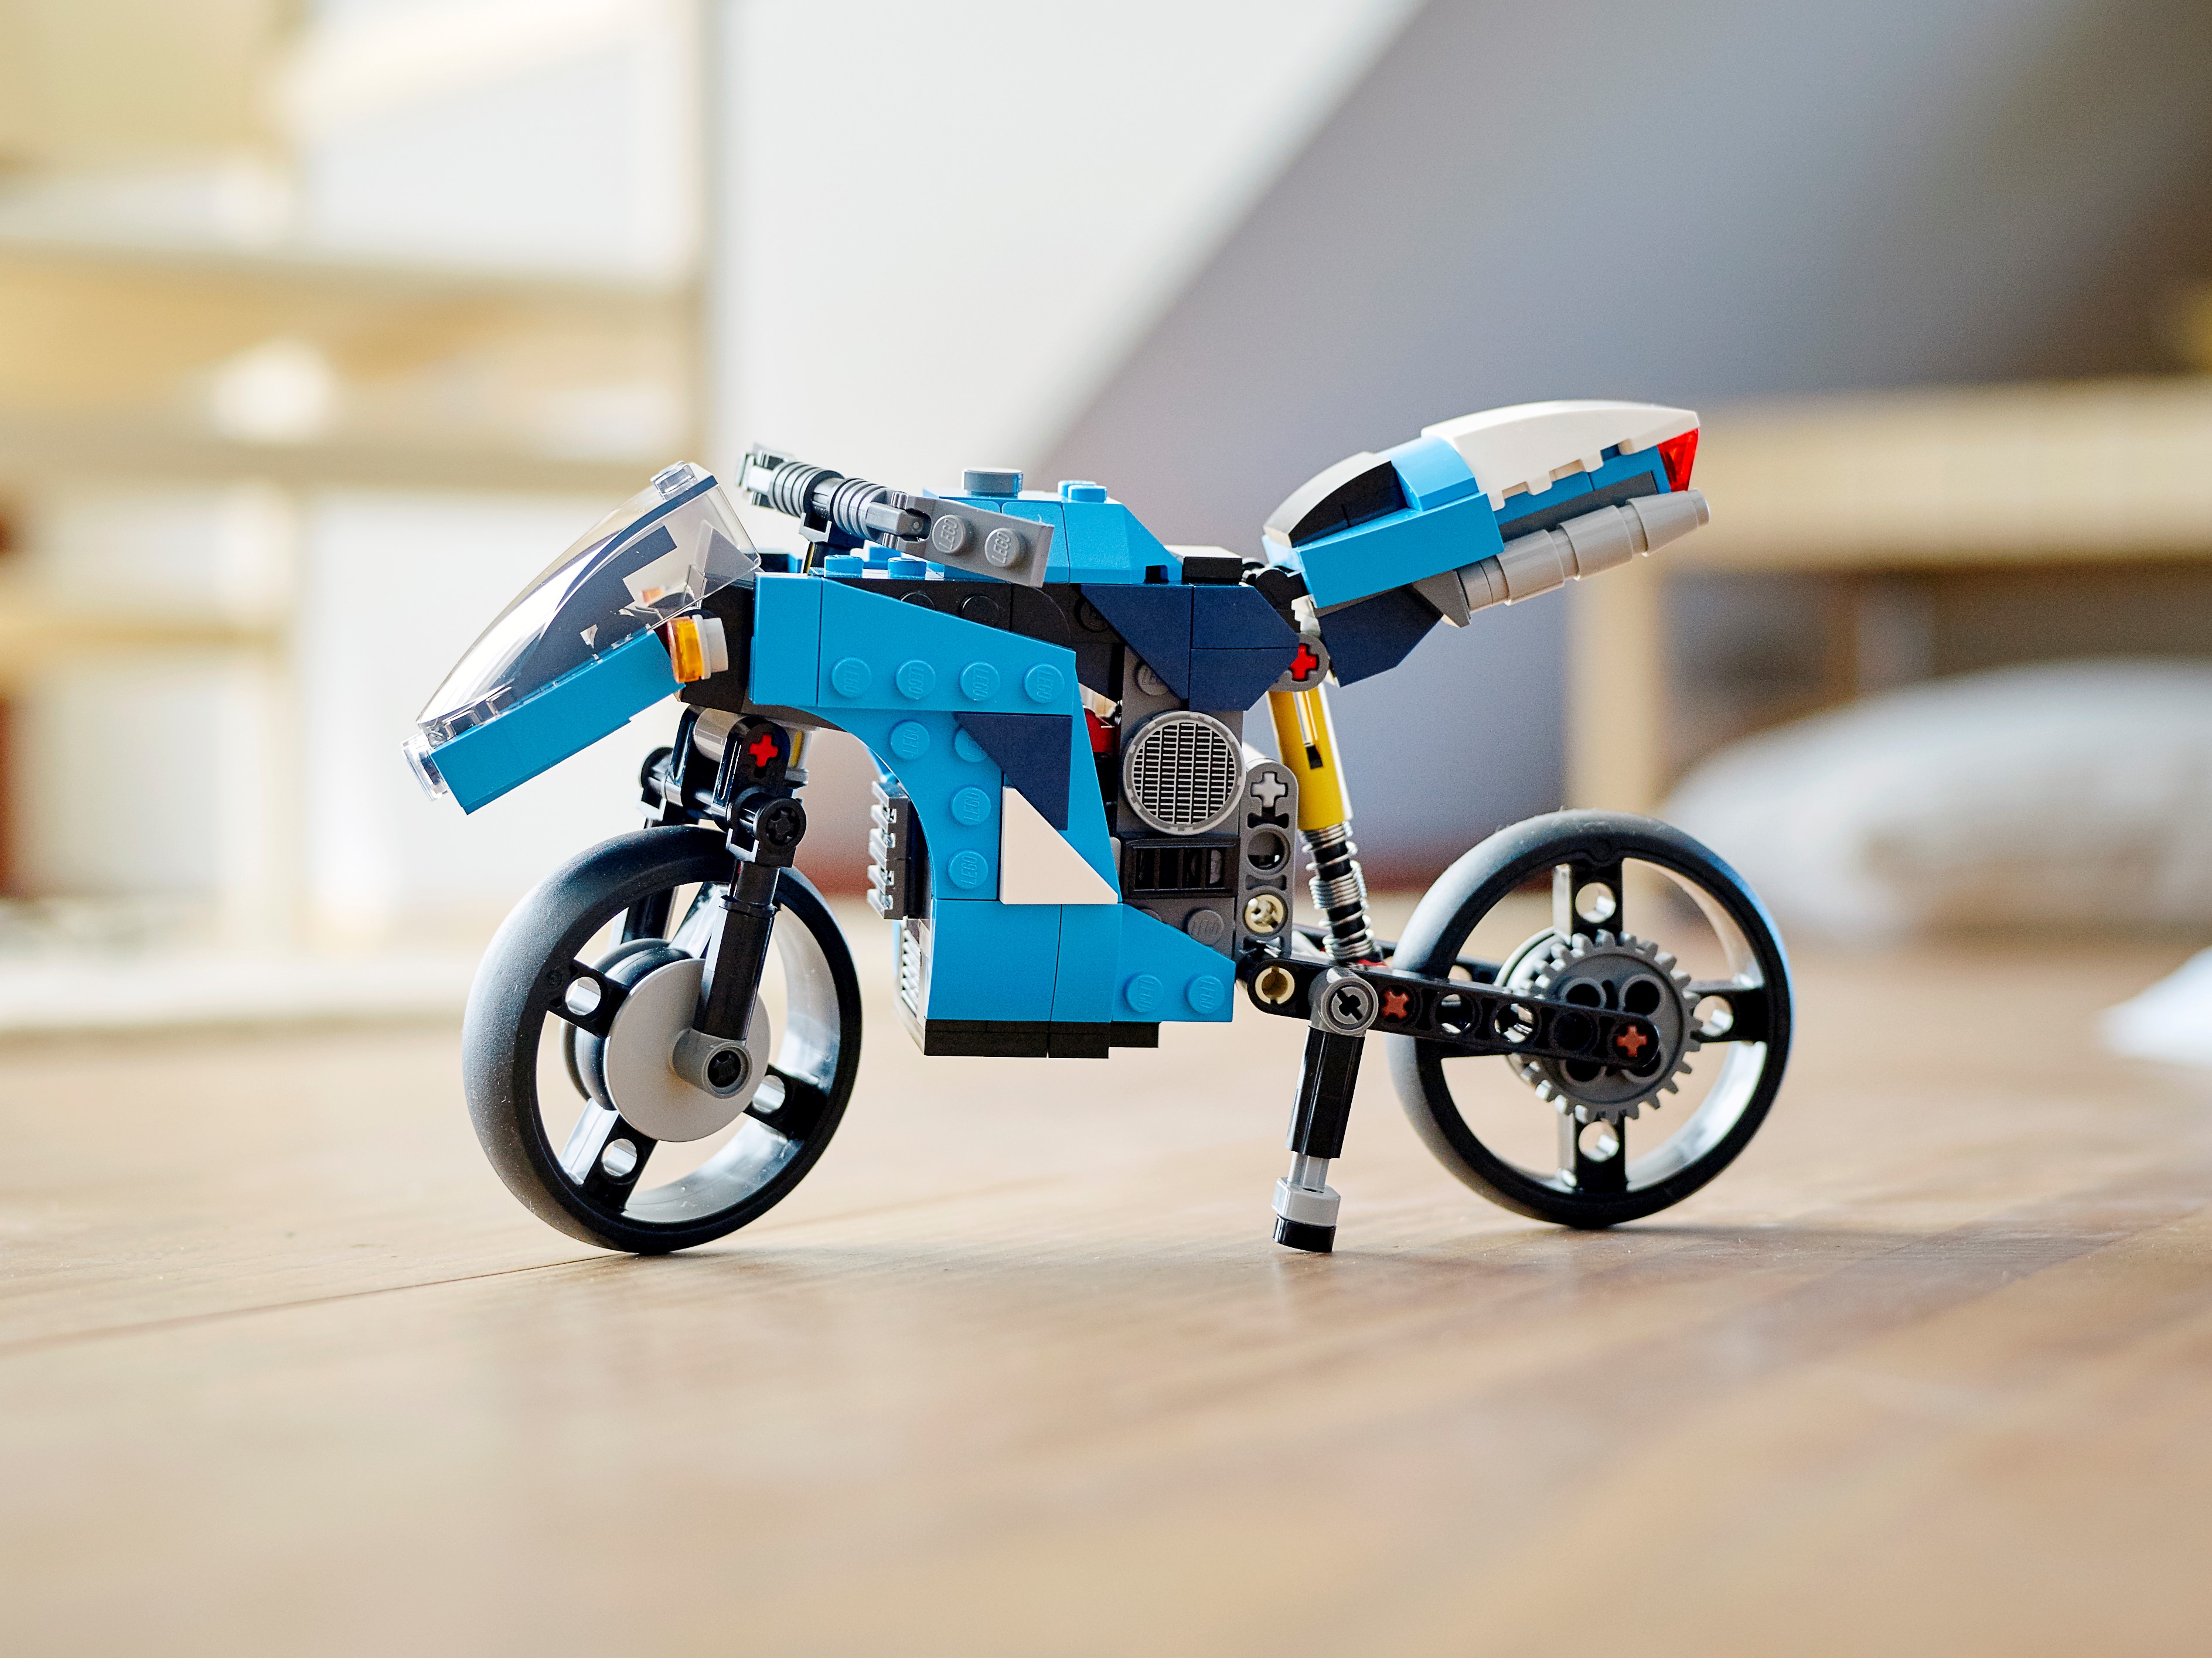 Bloques Lego Creator 3 En 1 Superbike 236 Piezas 